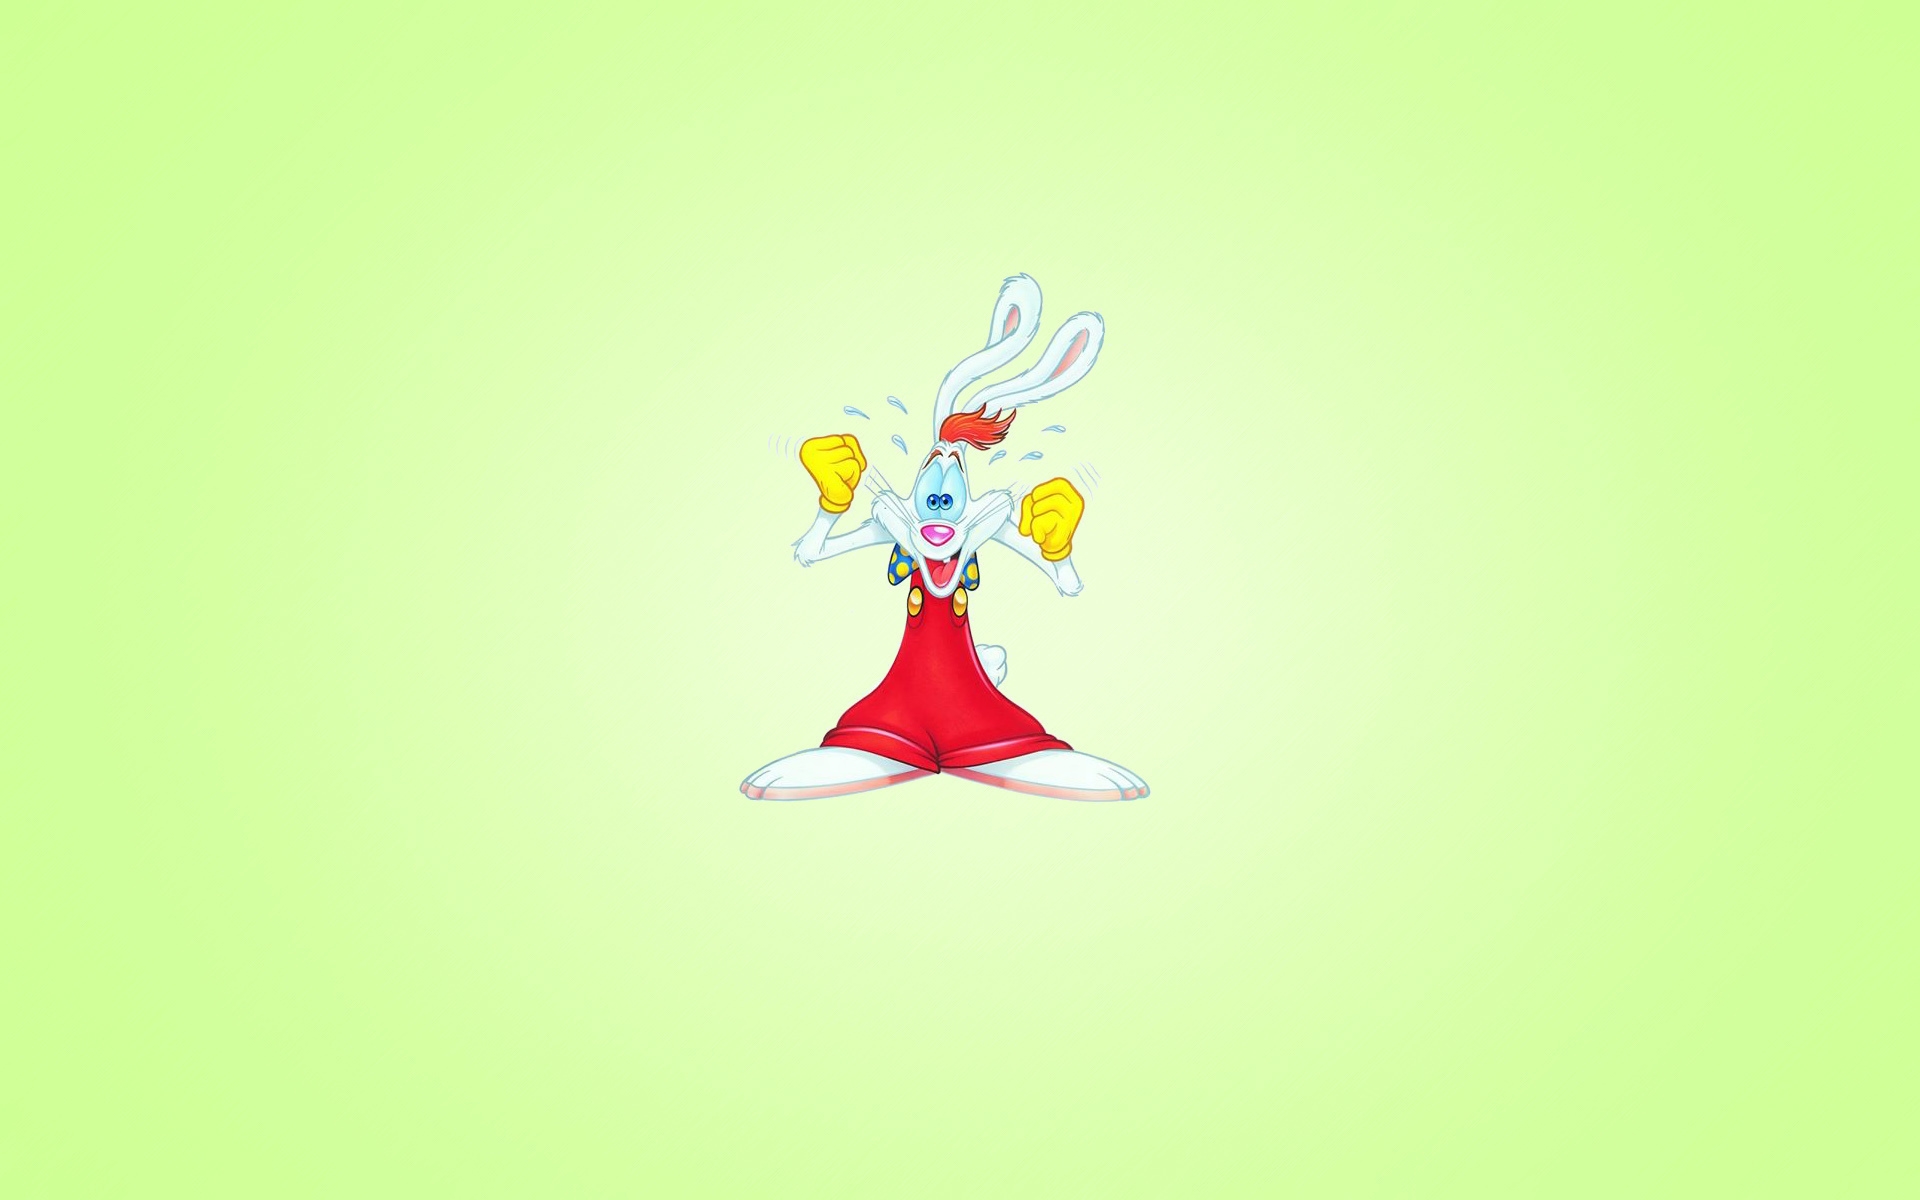 دانلود والپیپر خرگوش کارتونی گوگولی با لباس قرمزش 